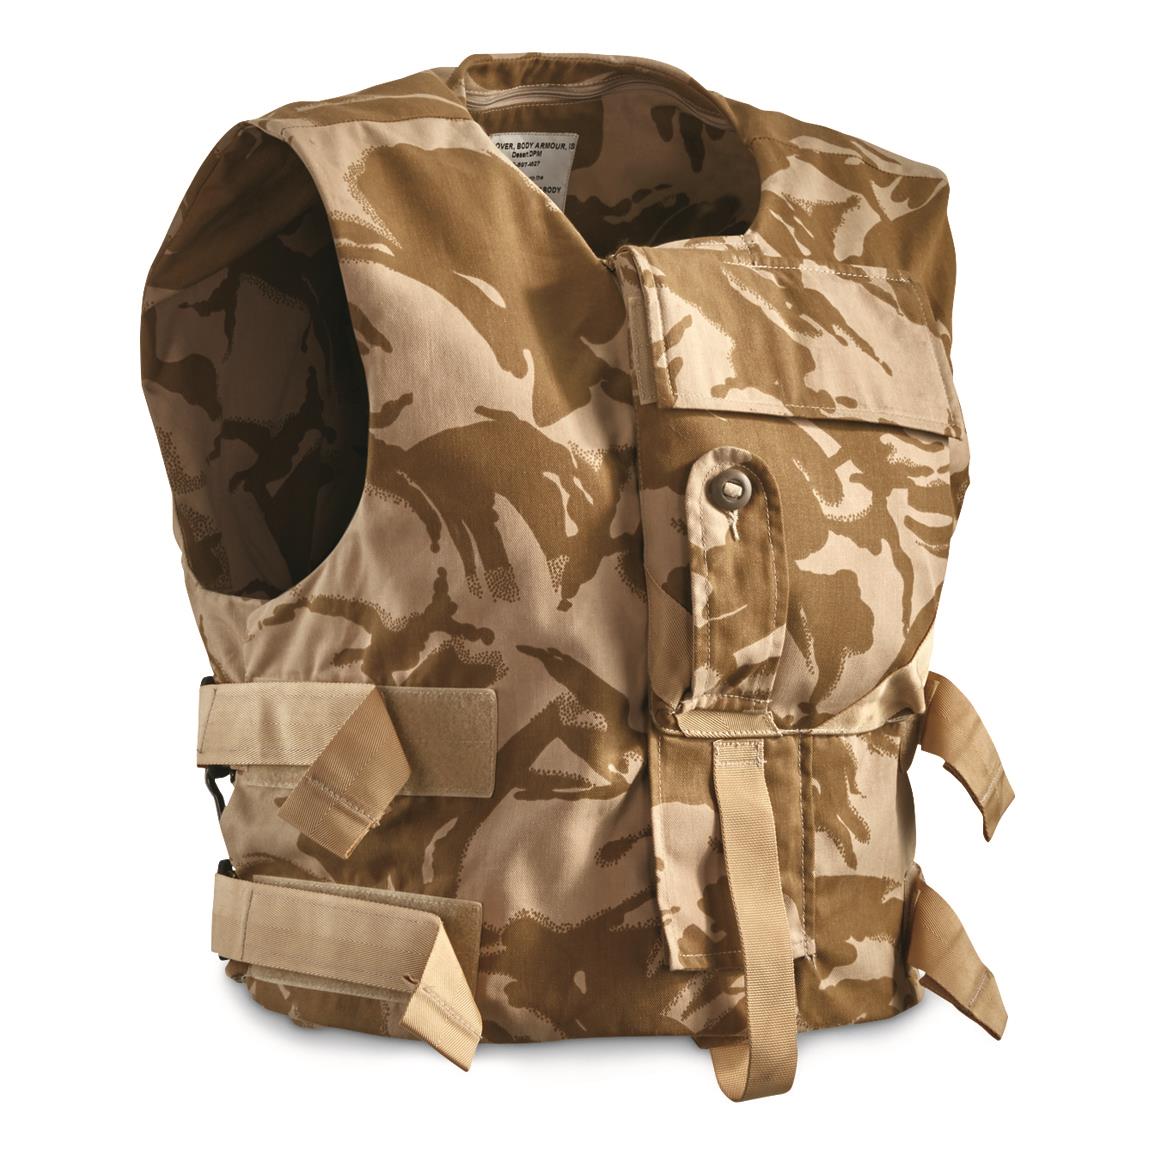 British Military Surplus Body Armor Vest, Like New, Desert Camo